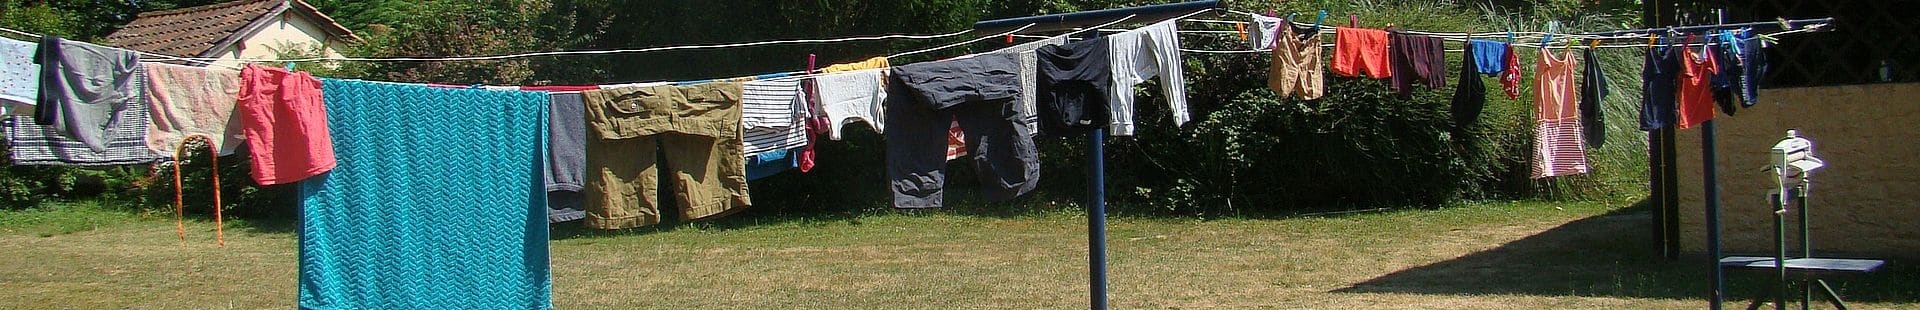 Rêve clothesline